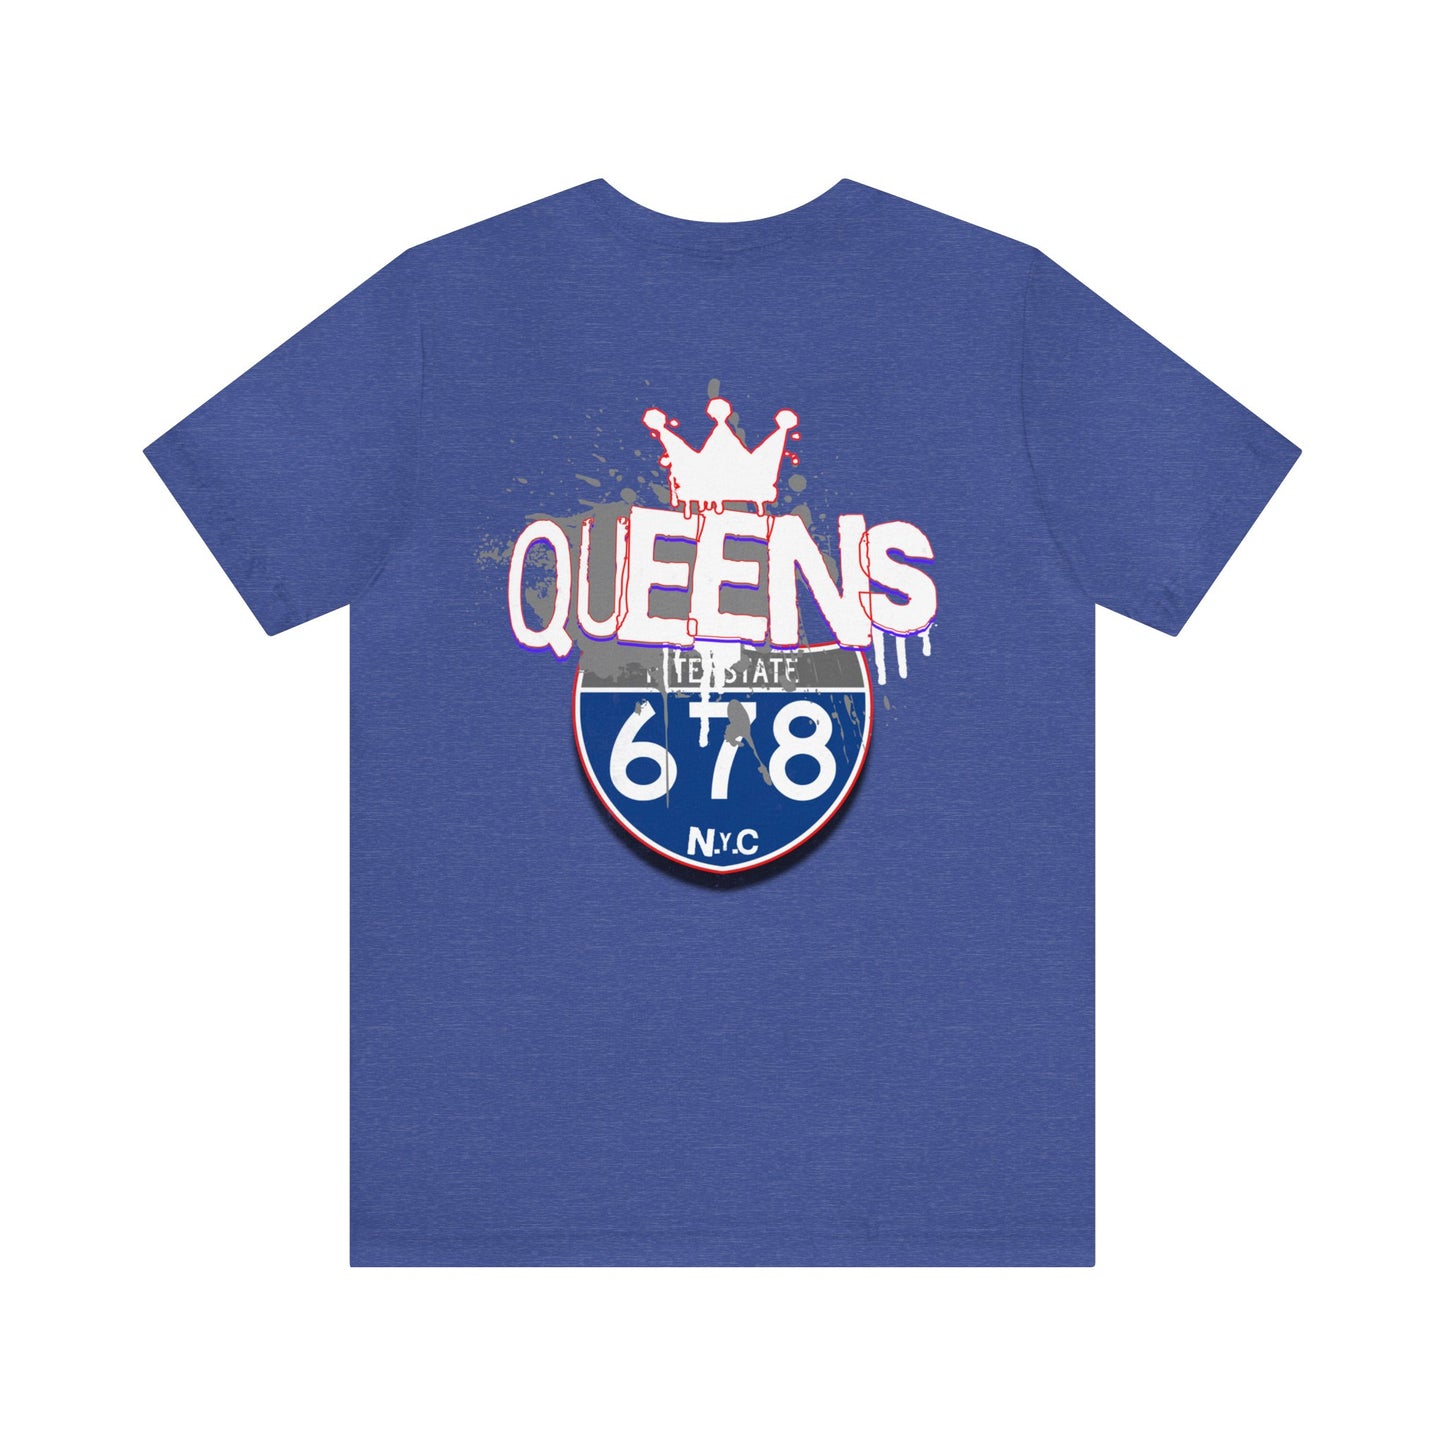 i-678, queens, ny, Unisex Jersey Short Sleeve Tee